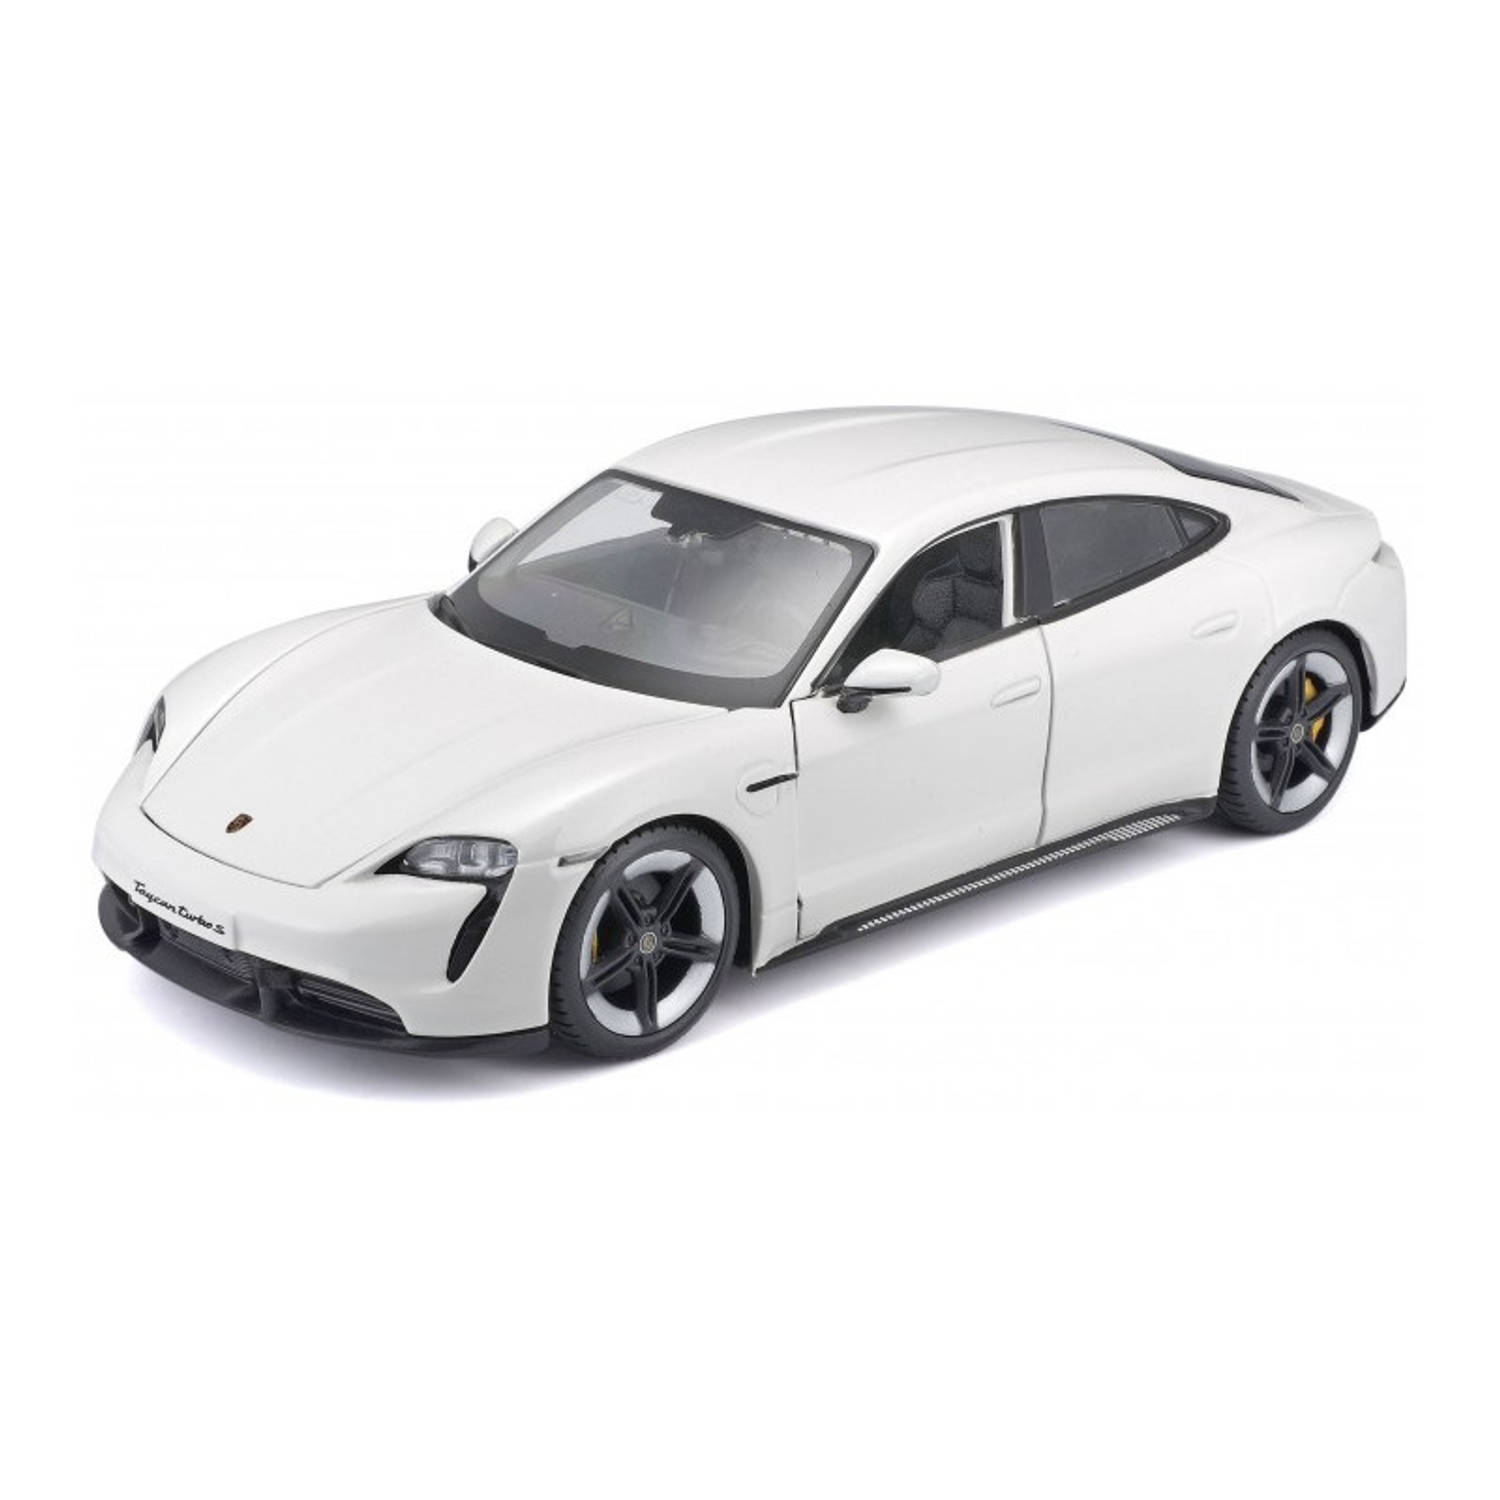 Modelauto Porsche Taycan wit schaal 1:24/20 x 8 x 6 cm - Speelgoed auto&apos;s